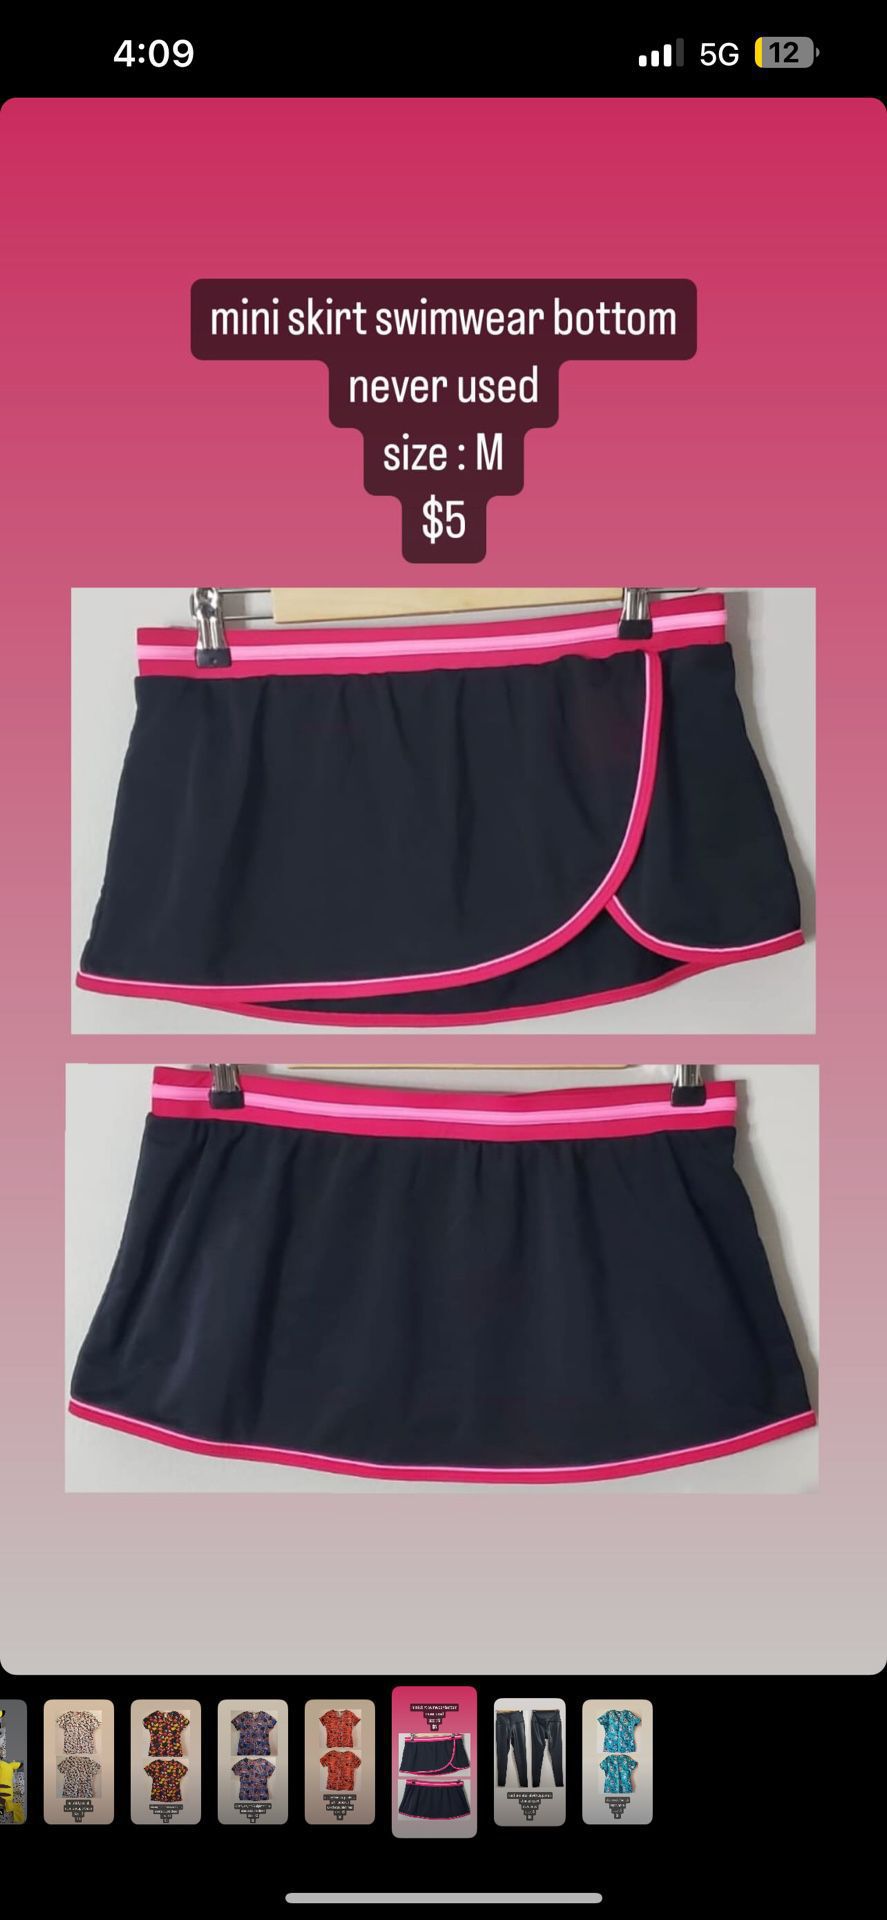 skirts/swimming bottoms